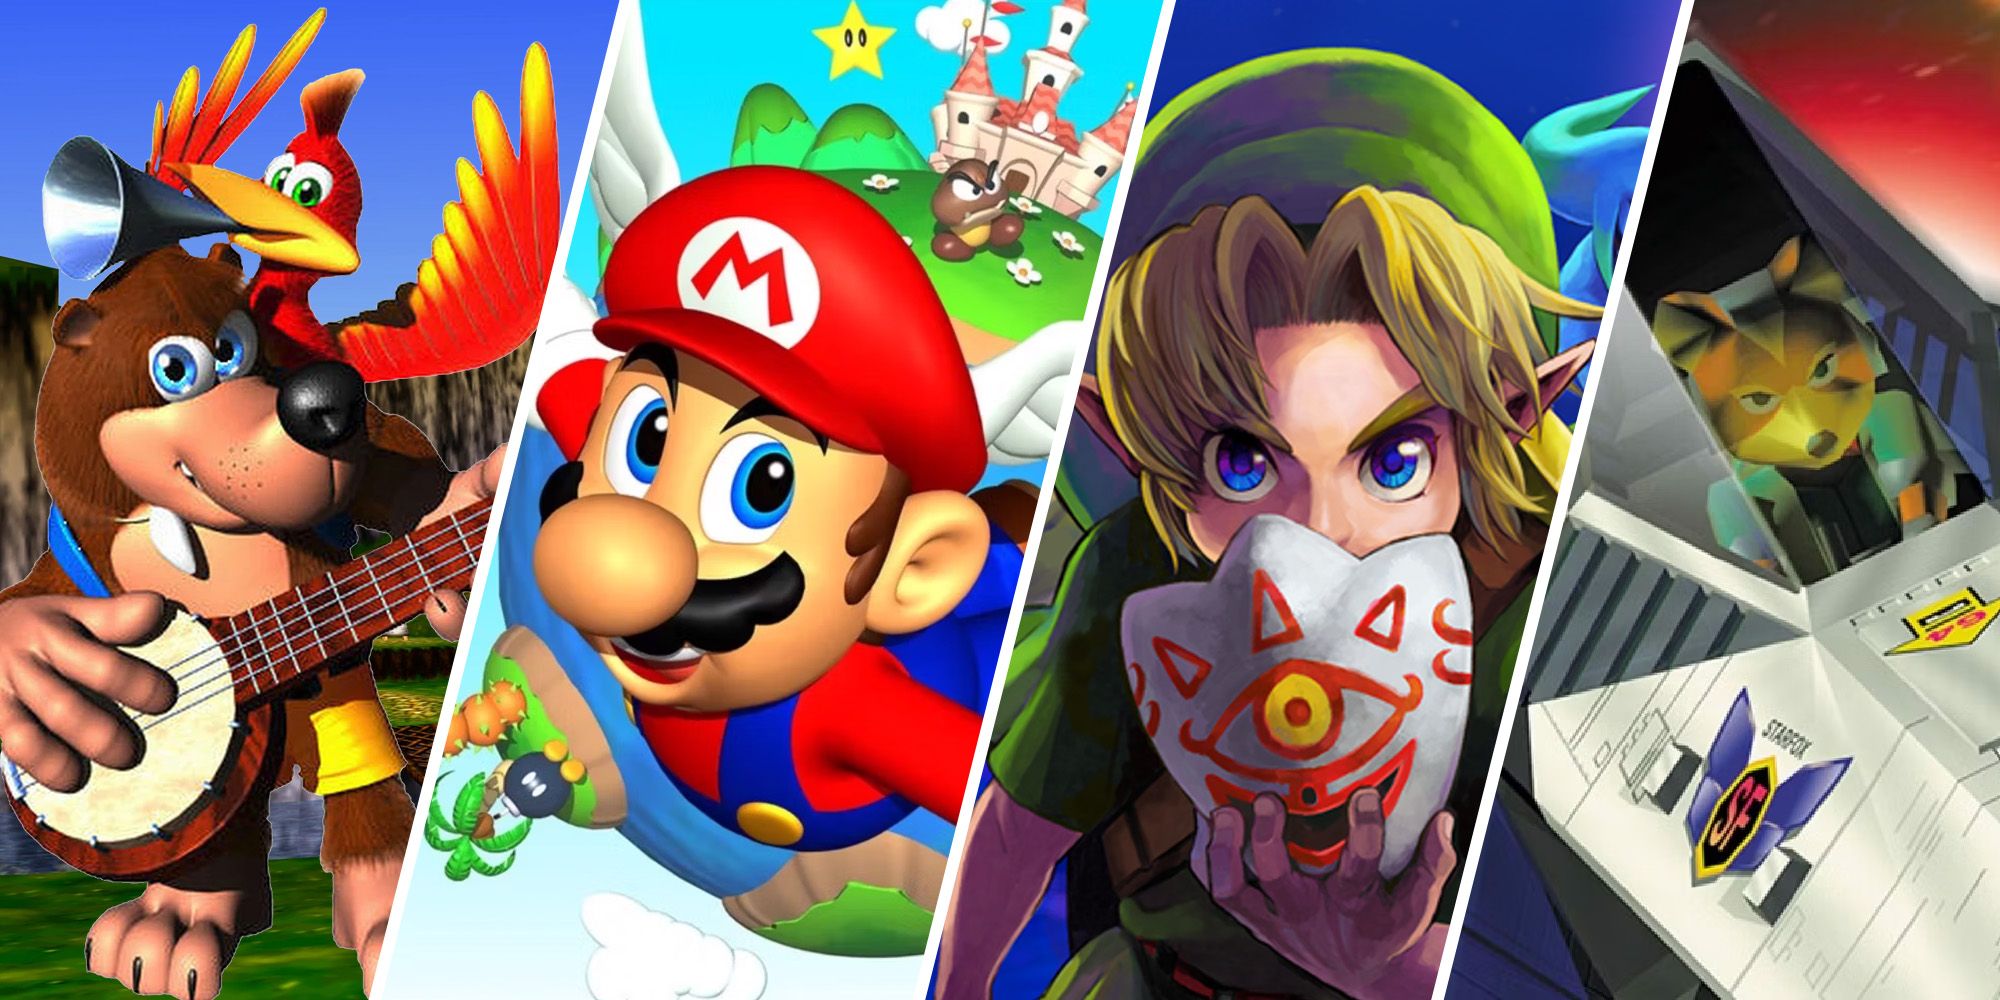 The Best N64 Games - Split image of Banjo Kazooie, Super Mario 64, The Legend Of Zelda Majora's Mask, Star Fox 64